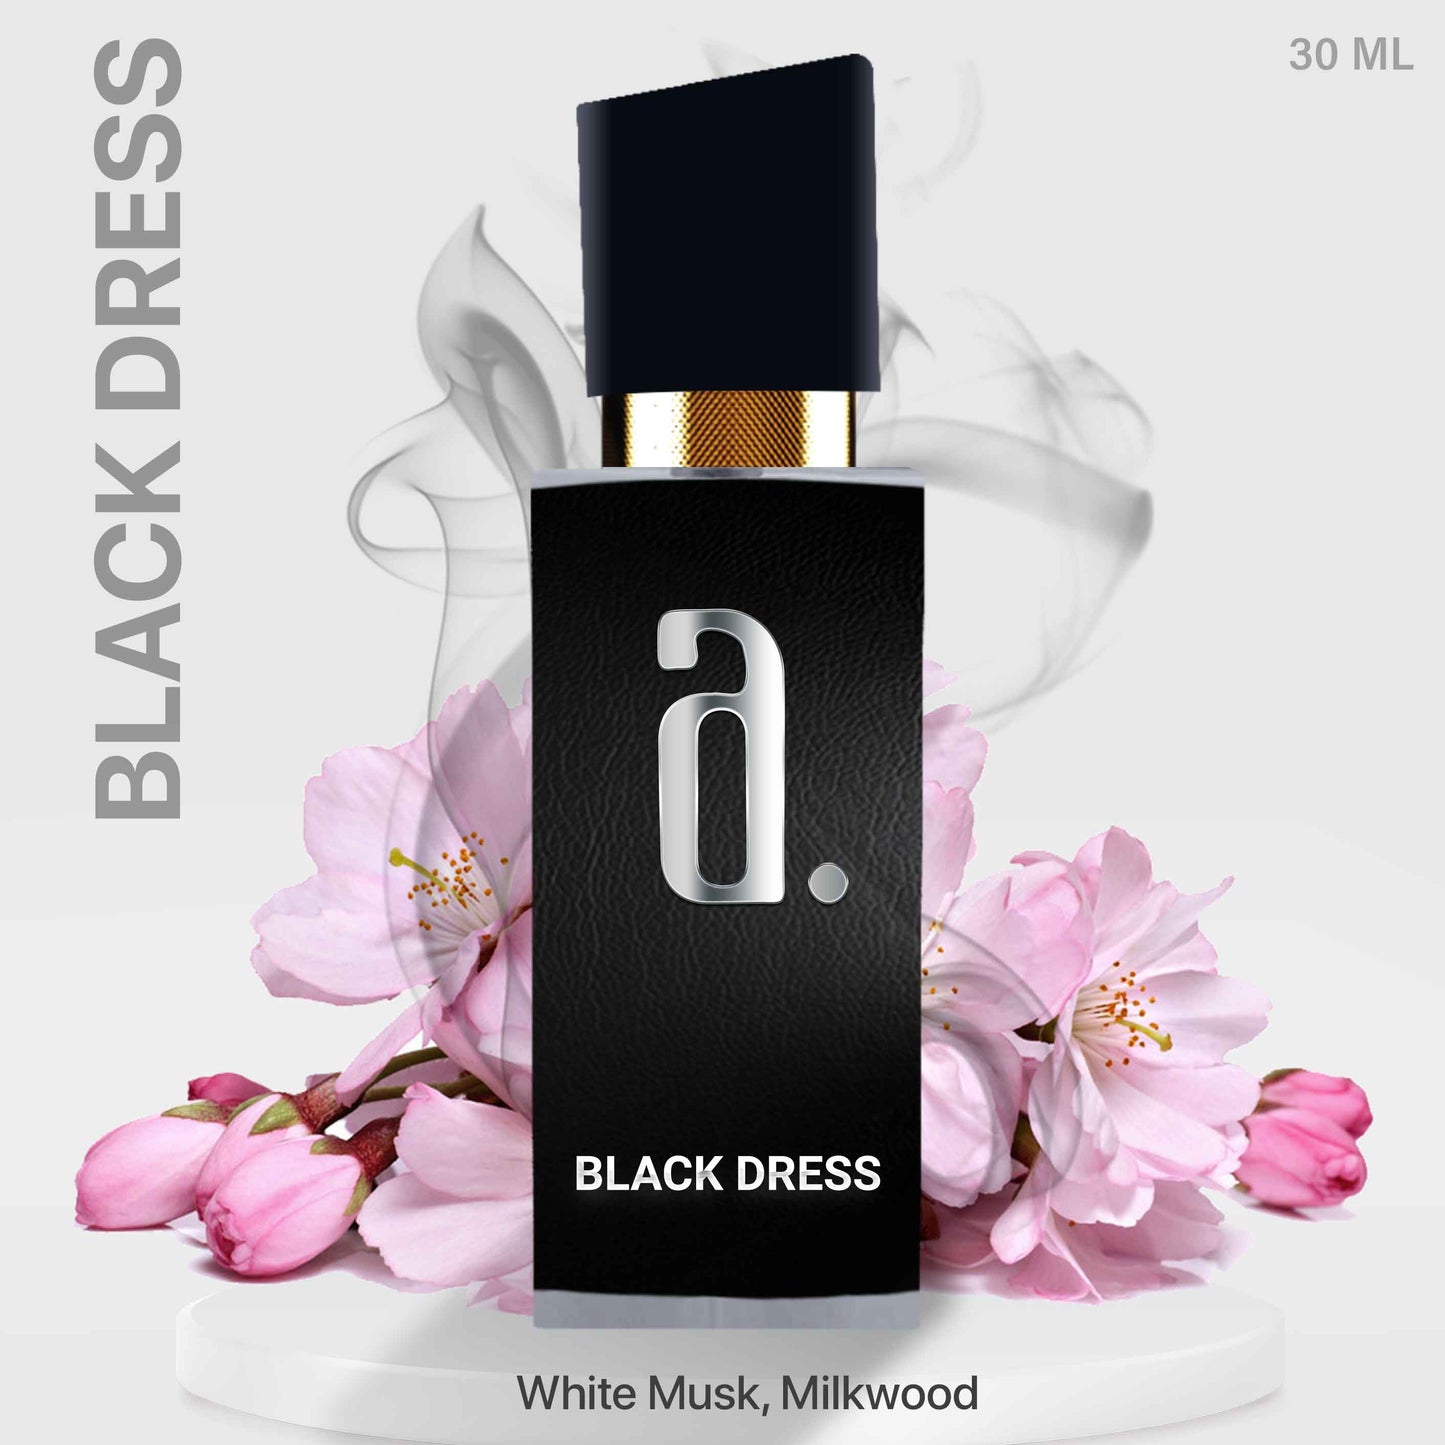 BLACK DRESS - INSPIRED BY BLACK AFGAN